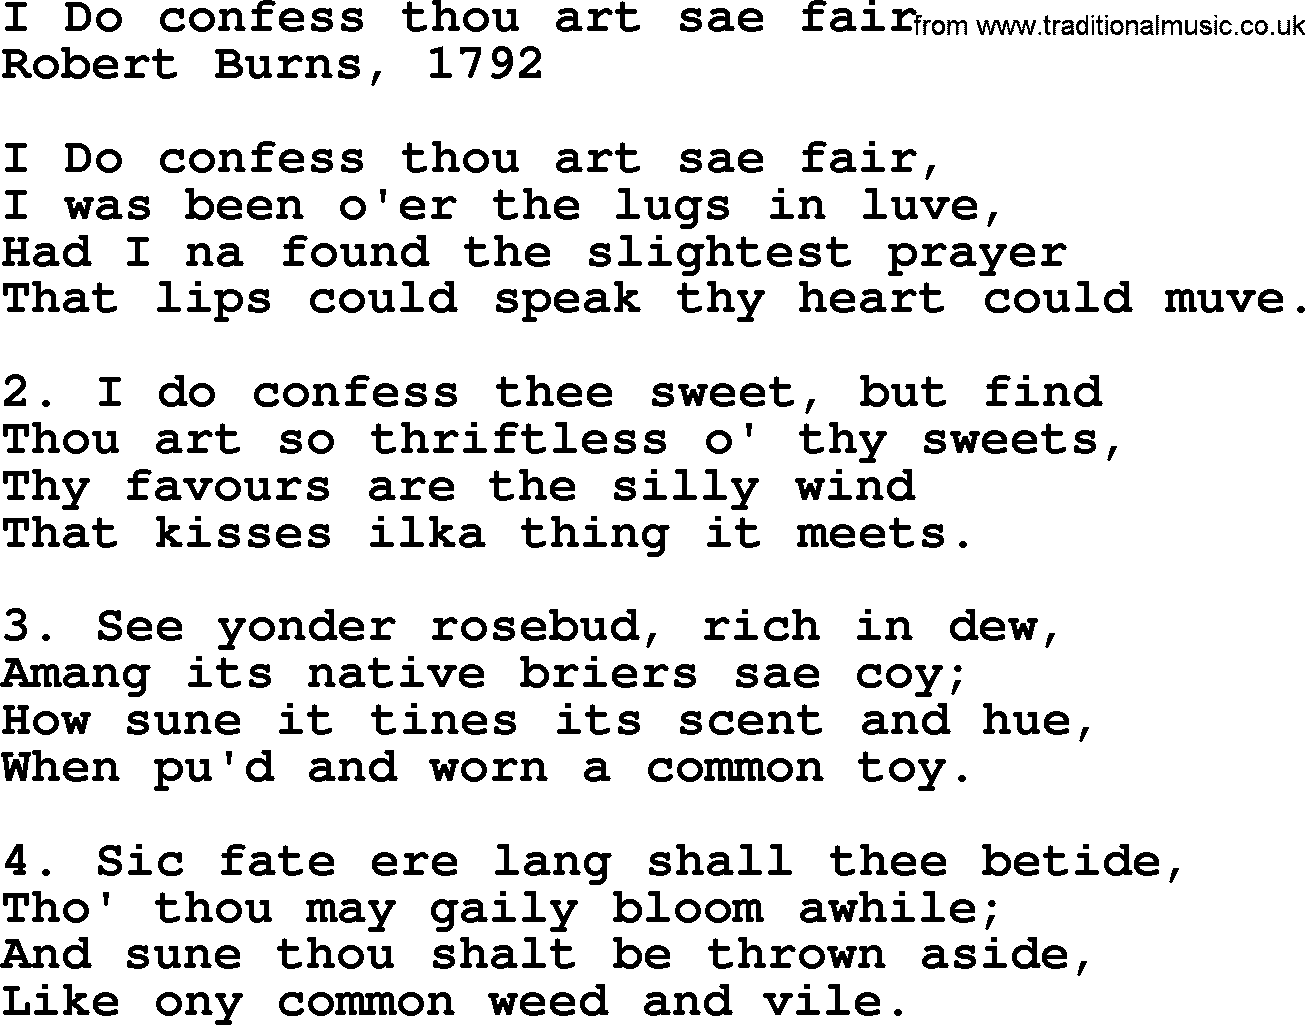 Robert Burns Songs & Lyrics: I Do Confess Thou Art Sae Fair